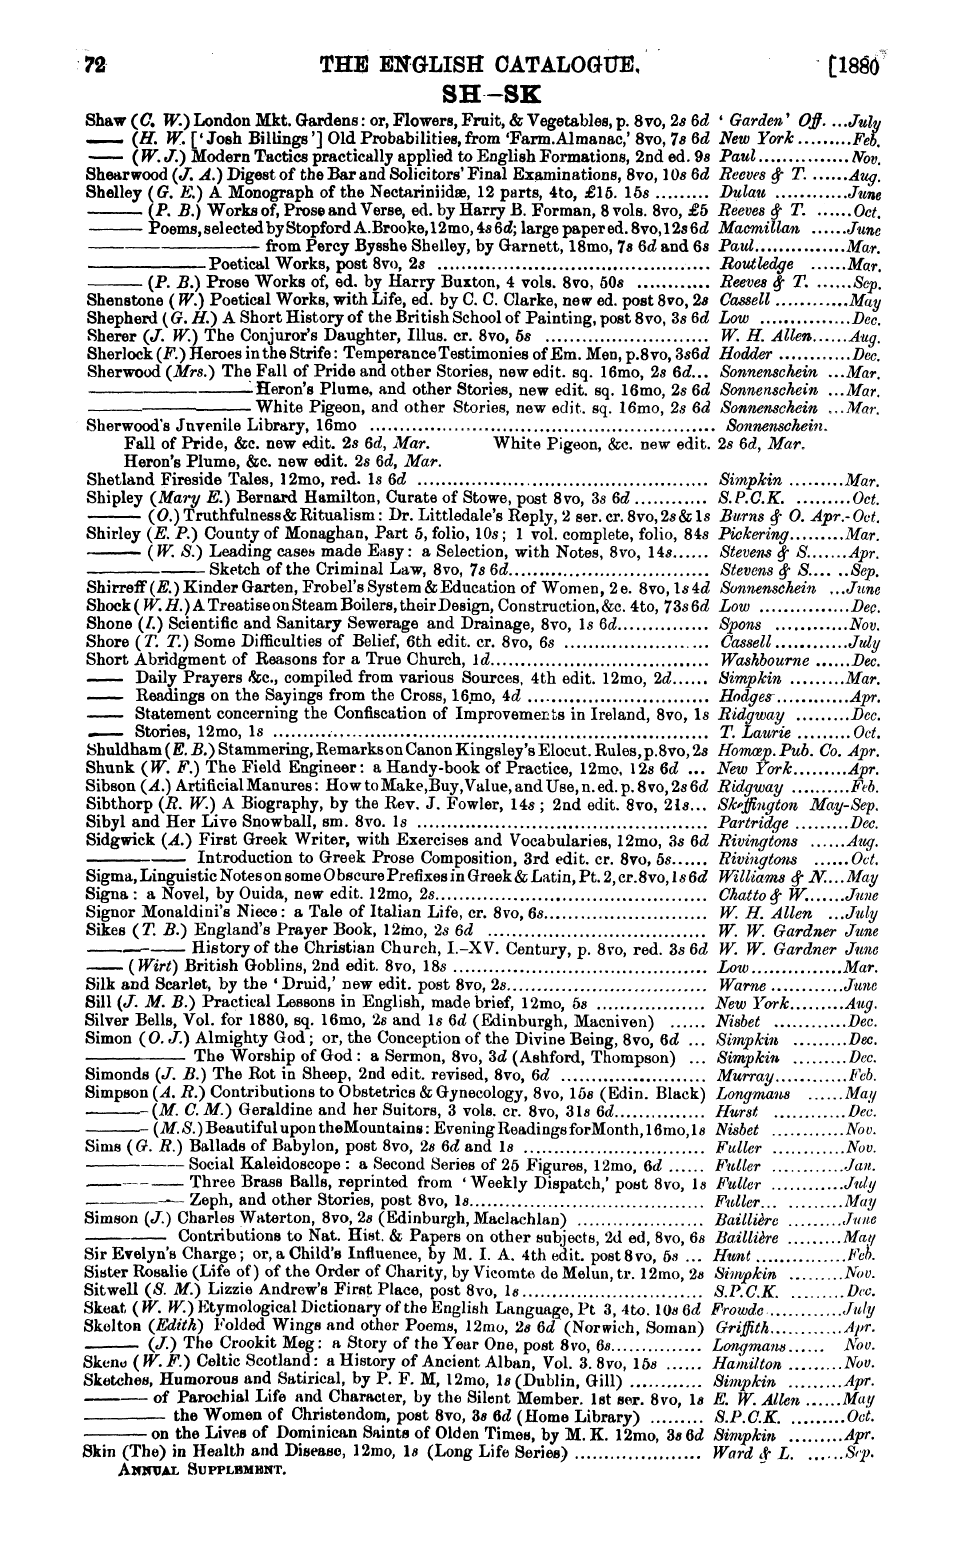 Publishers’ Circular (1880-1890): jS F Y, 1st edition: 75